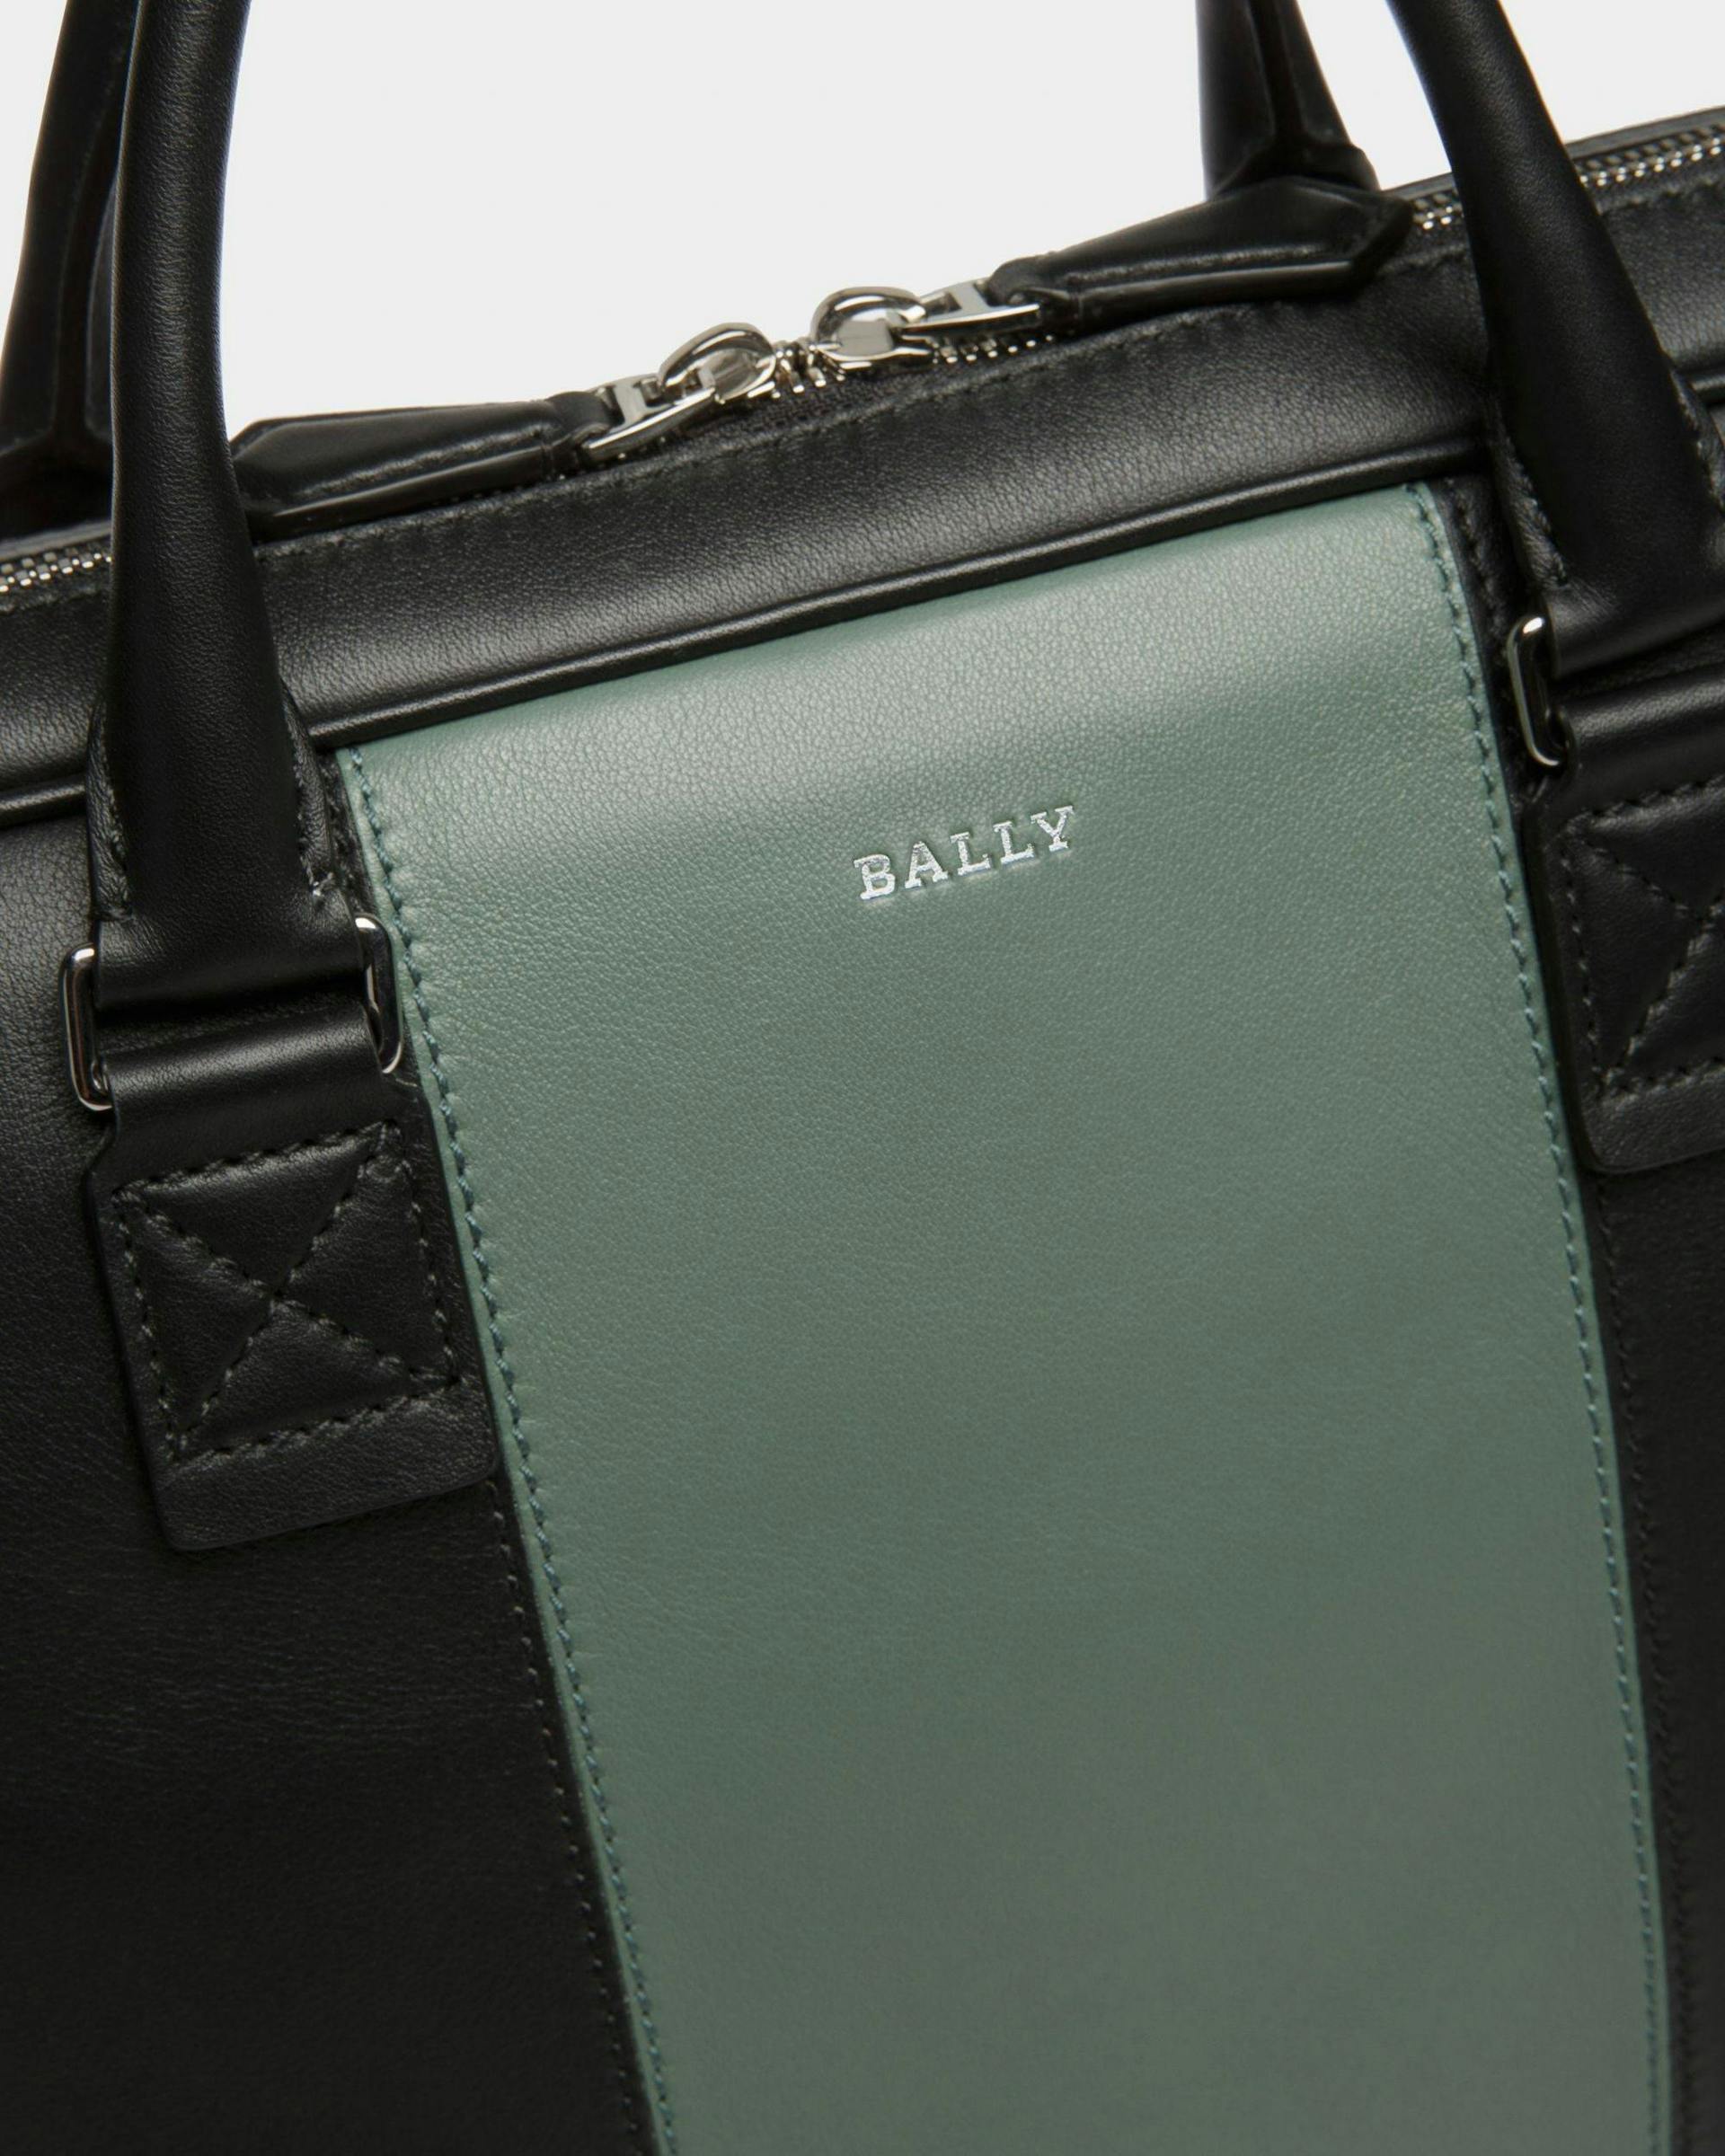 Hesines Leather Business Bag In Black & Green - Men's - Bally - 05